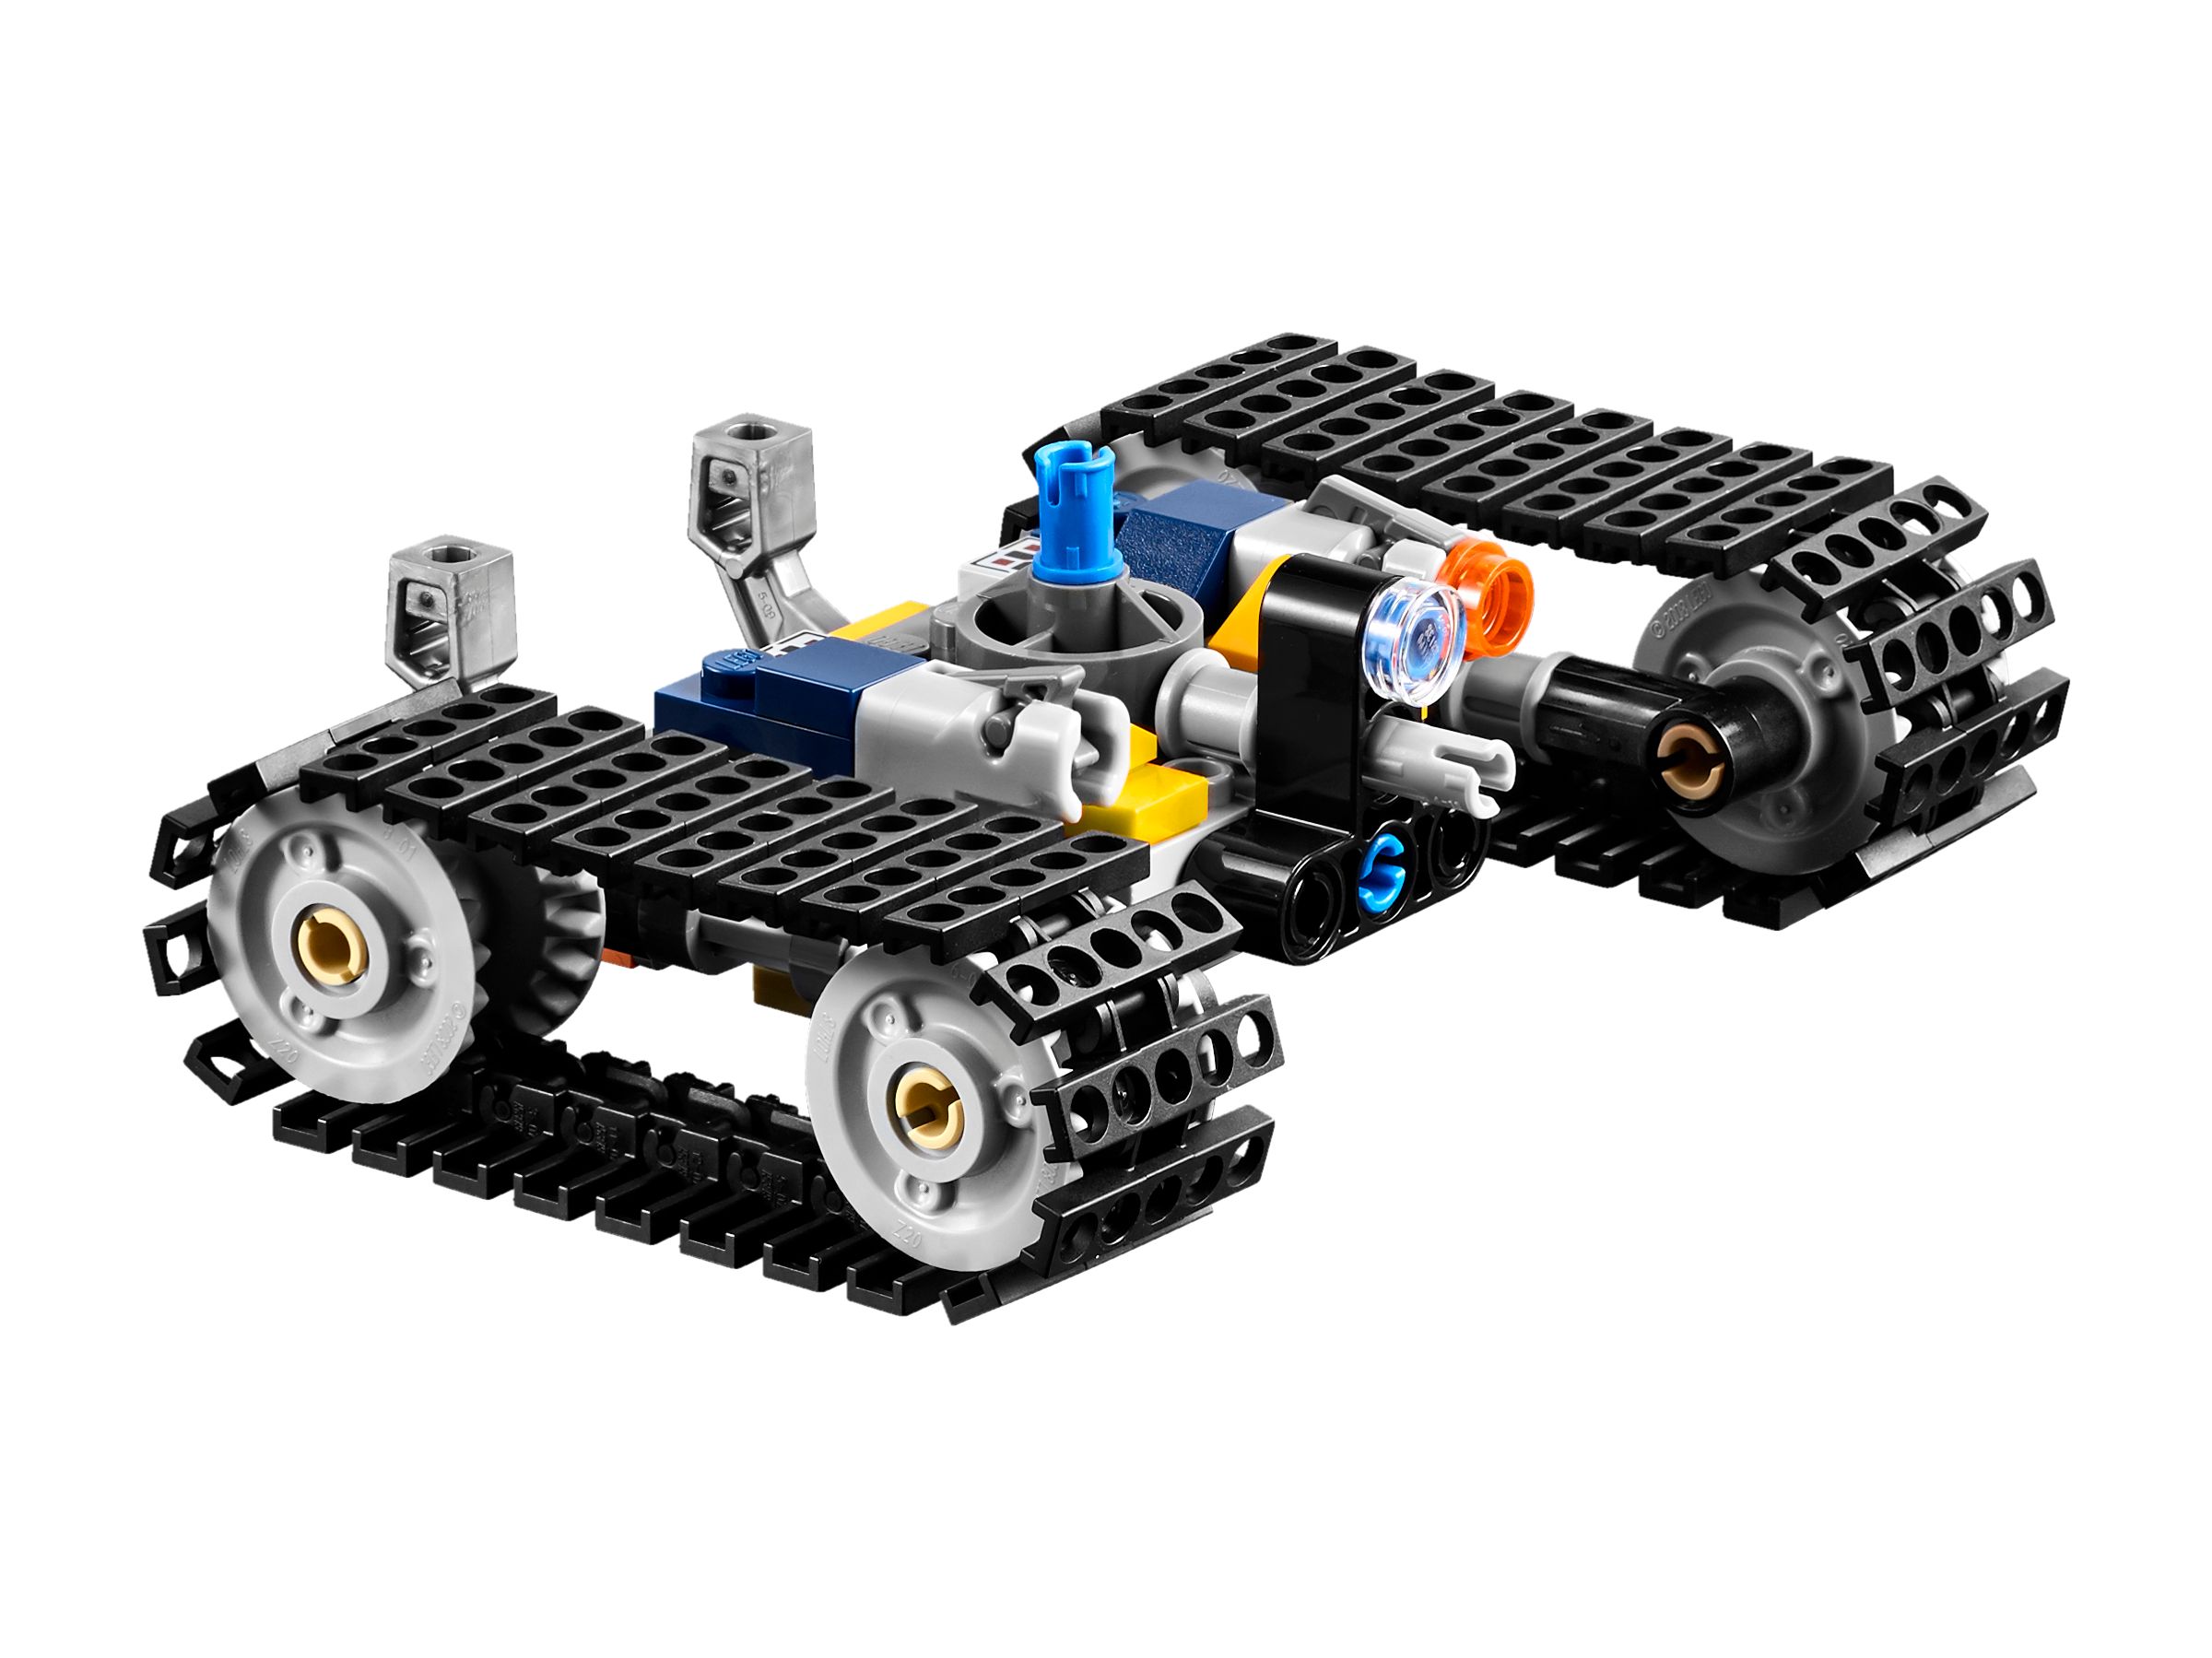 LEGO Nexo Knights 70354 Axls Krawallmacher LEGO_70354_alt4.jpg